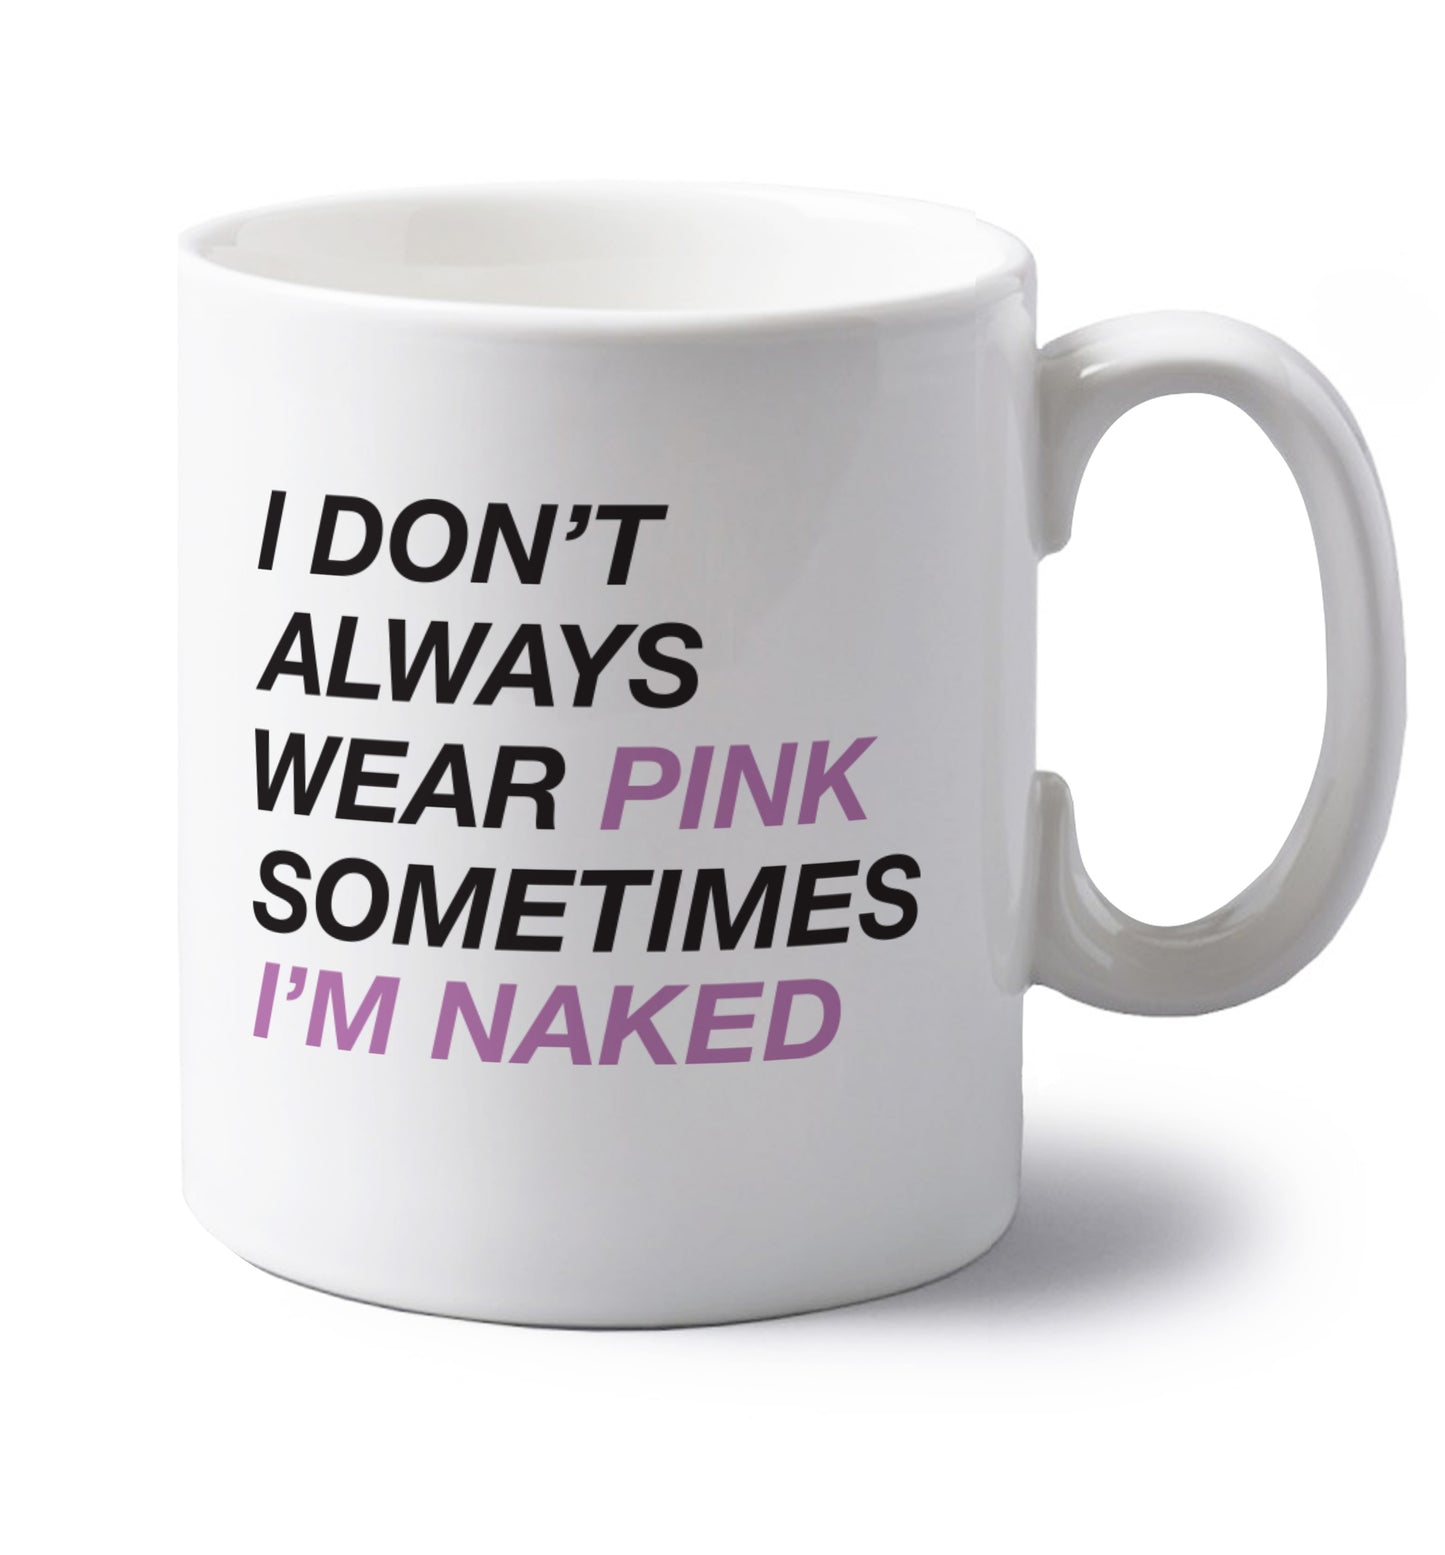 I don't always wear pink sometimes I'm naked left handed white ceramic mug 